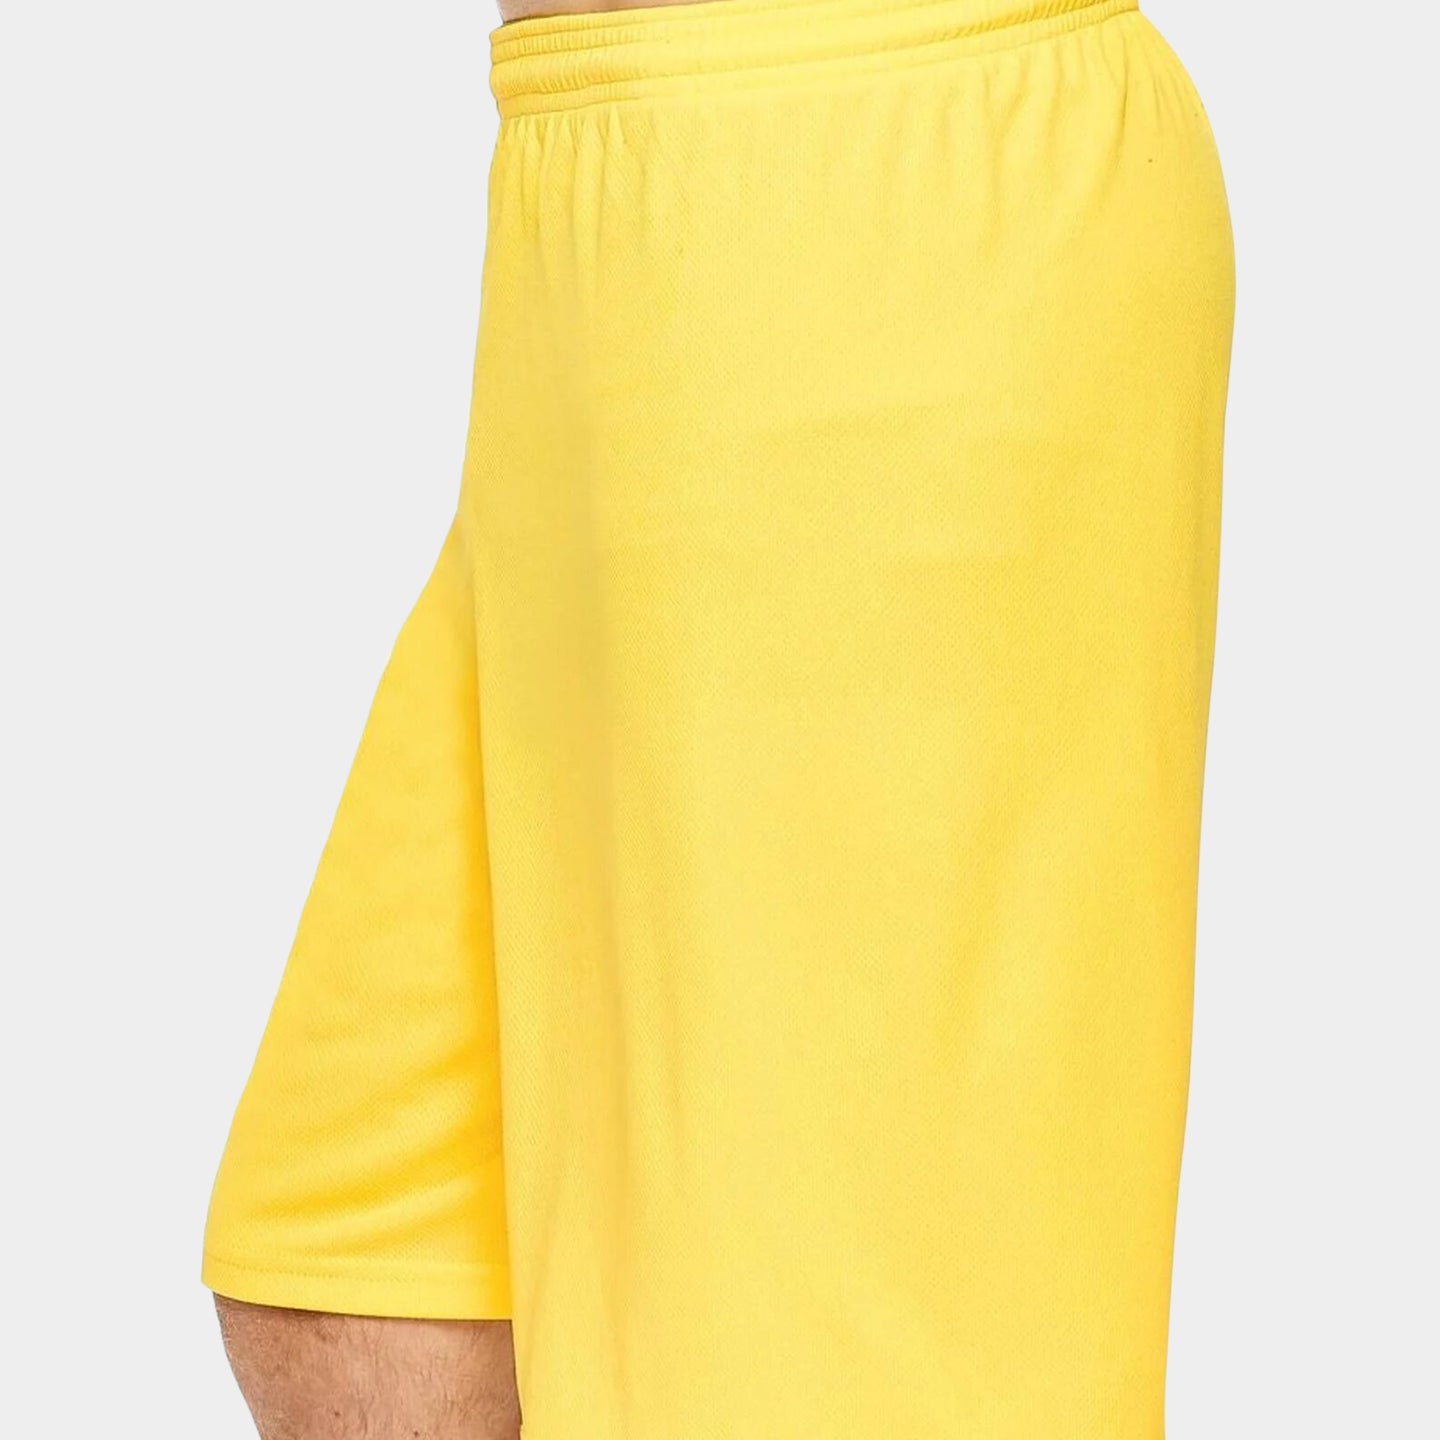 Expert Brand Oxymesh Men's Performance Training Shorts, 2XL, Yellow A1